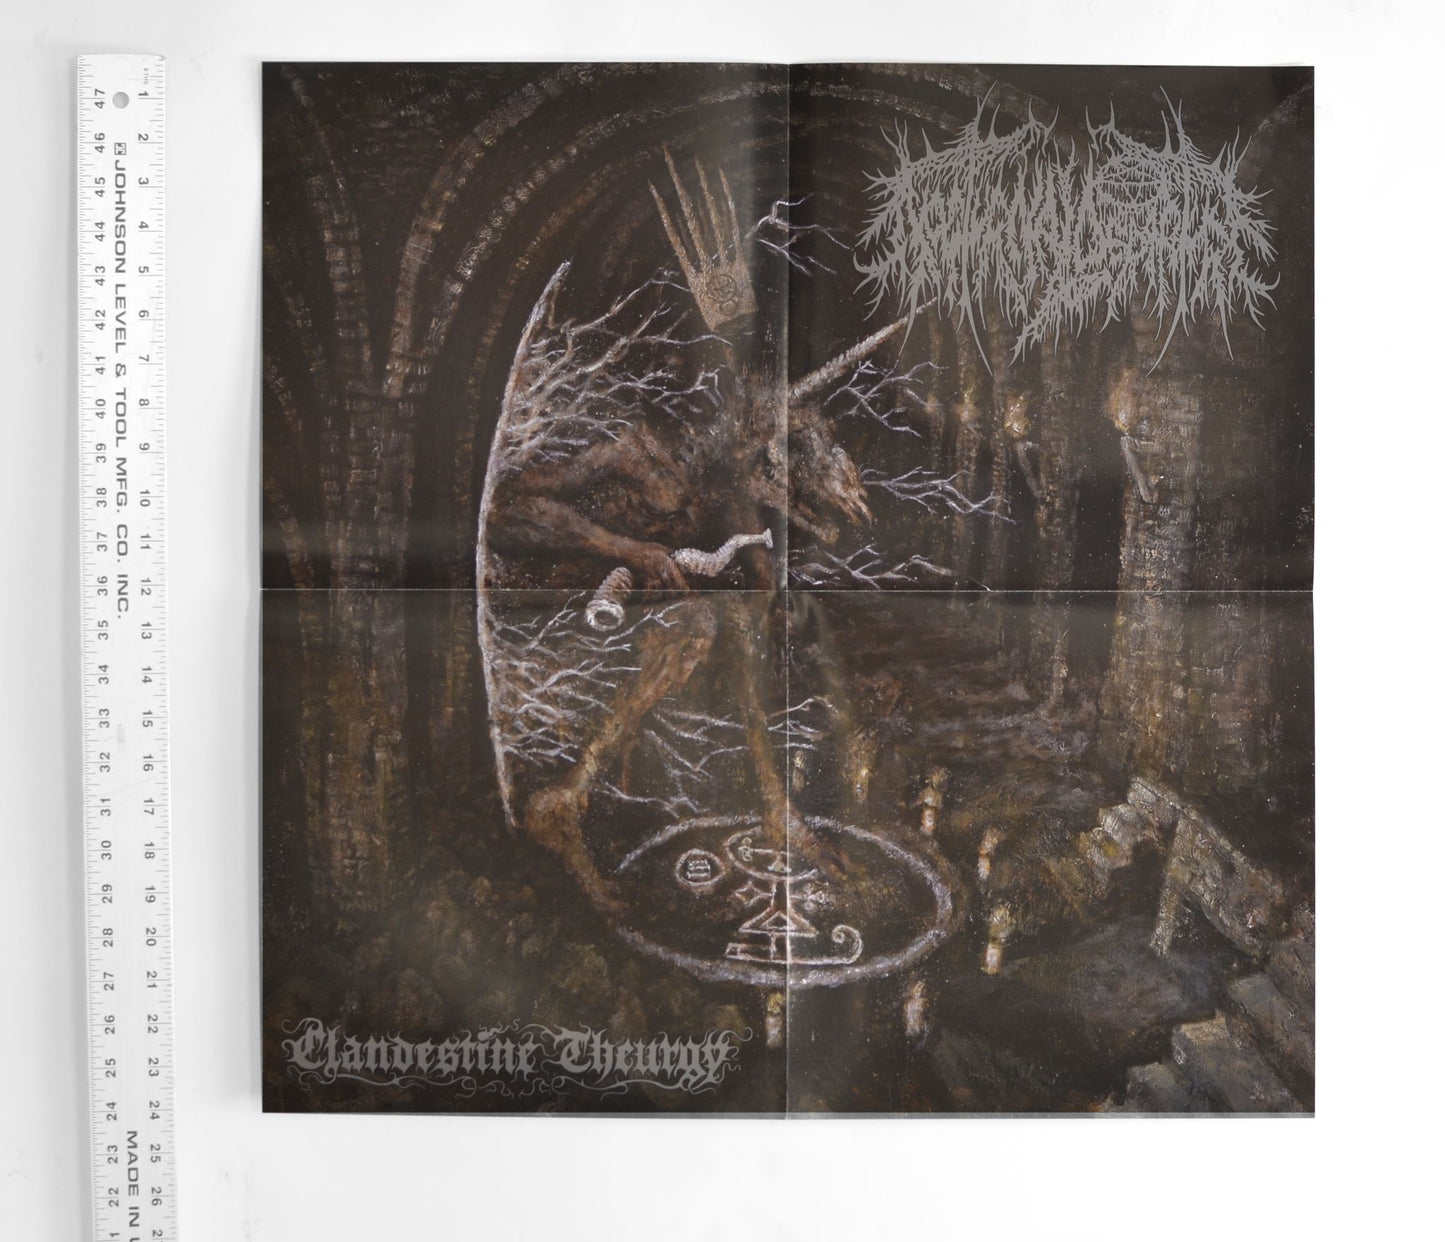 Noctunal Departure - Clandestine Theurgy (12" LP w/ Poster) - Black Metal aus Kanada